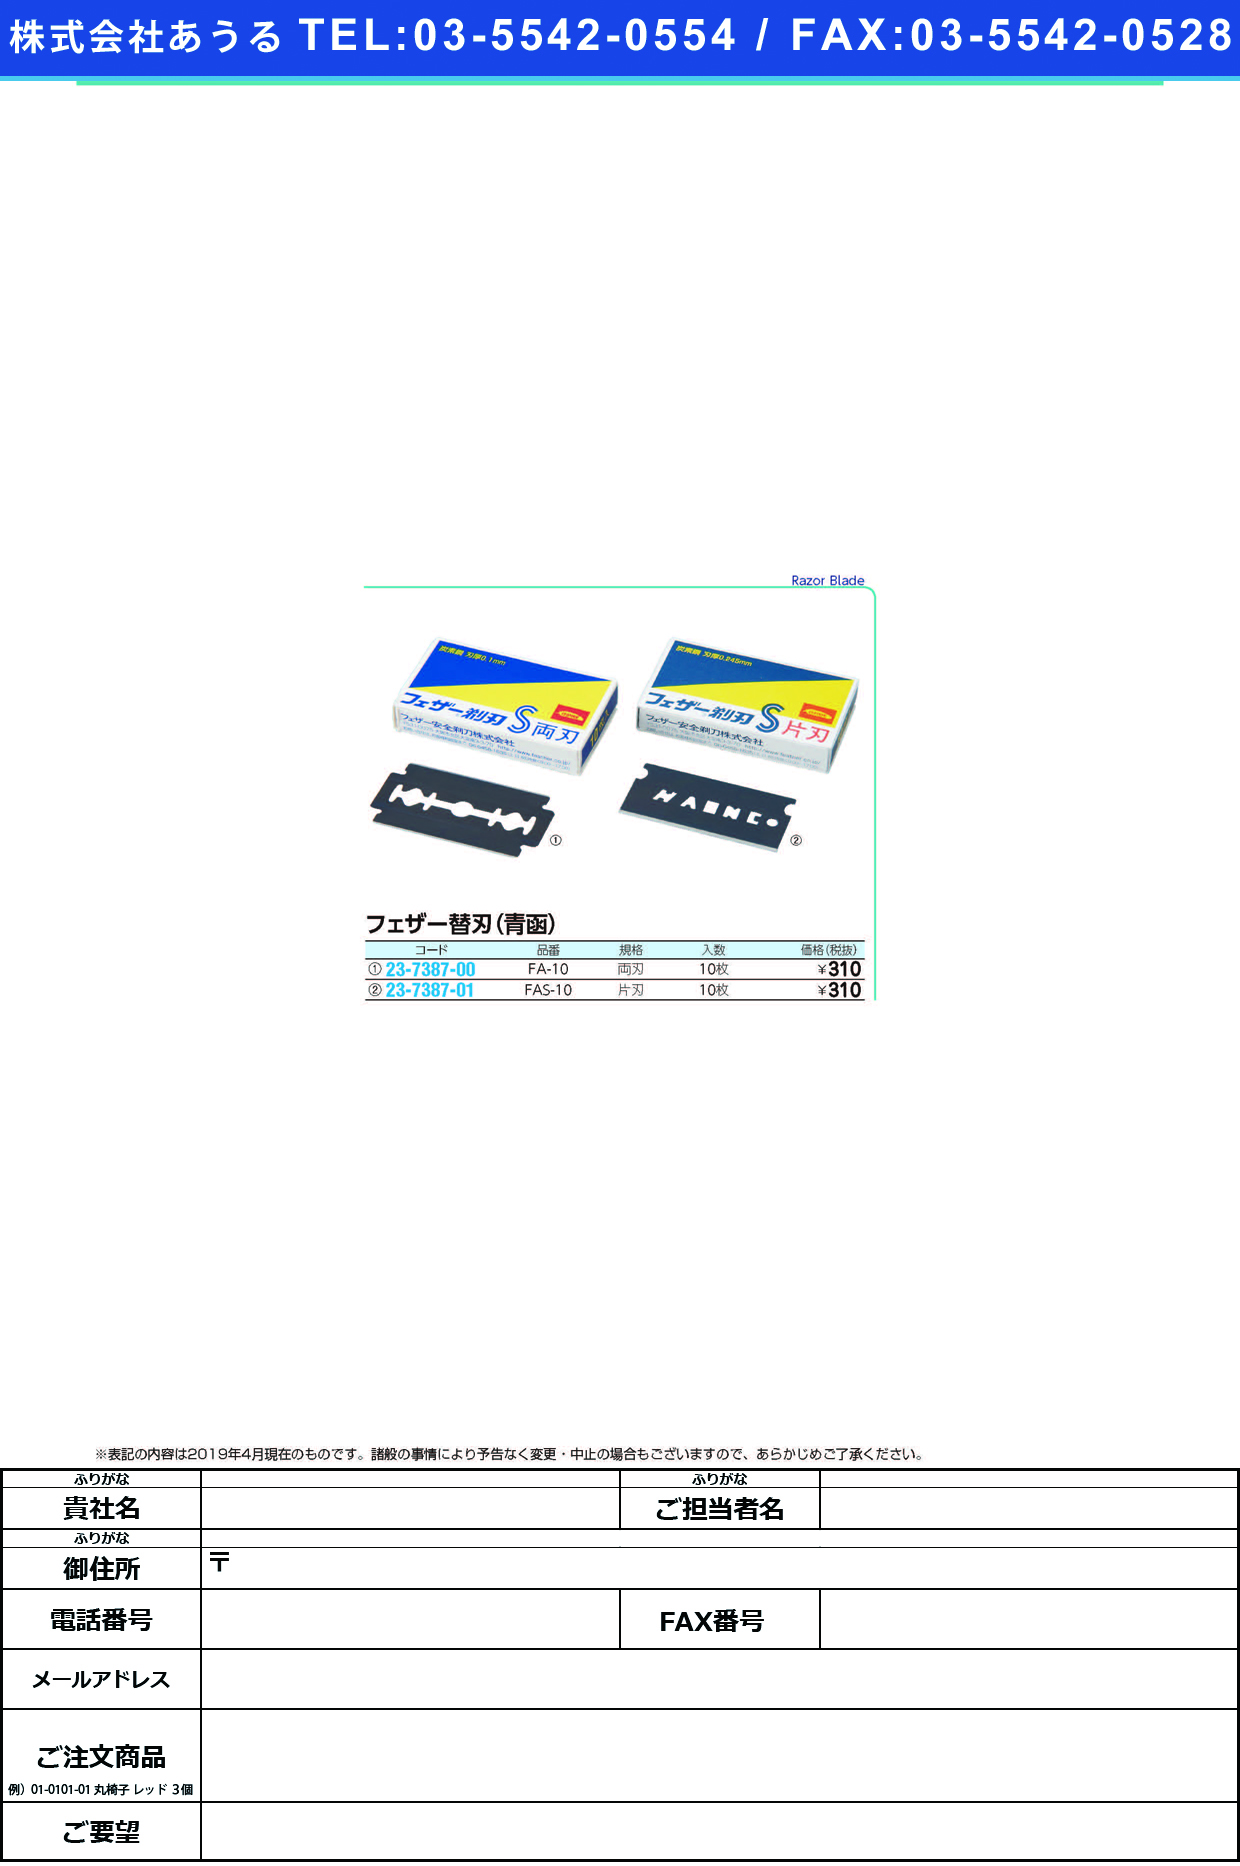 (23-7387-01)フェザー替刃青函片刃 FAS-10(10ﾏｲｲﾘ)ﾊｺｲﾘ ﾌｪｻﾞｰｶｴﾊﾞｱｵﾊﾞｺｶﾀﾊ【1個単位】【2019年カタログ商品】